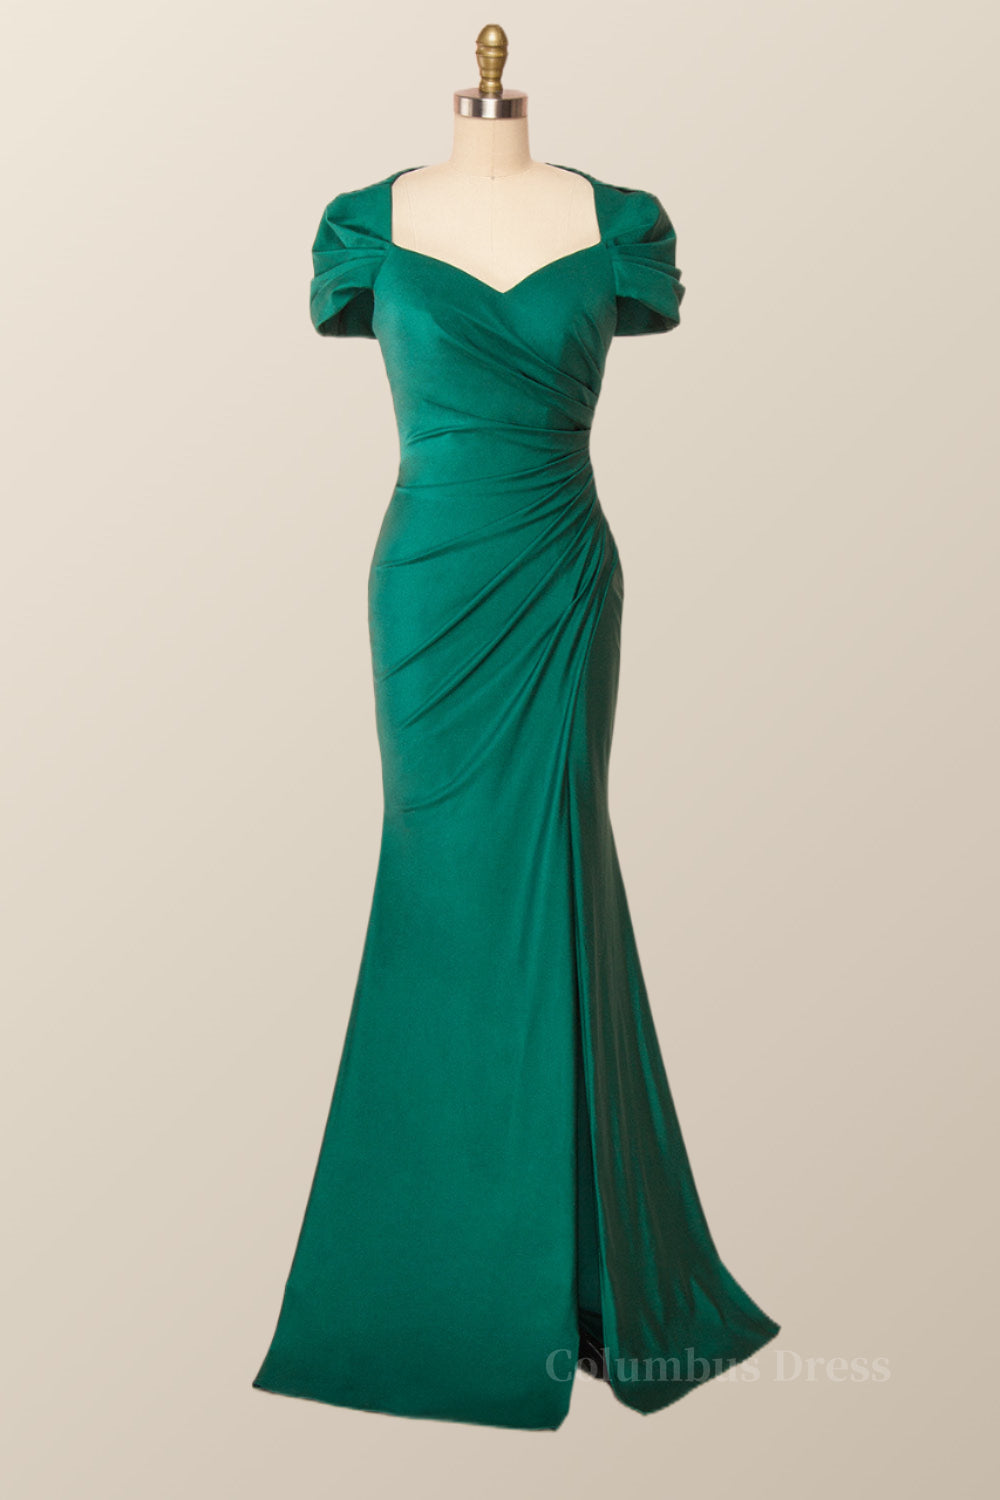 Formal Dresses Nearby, Cap Sleeves Green Memaid Long Formal Dress